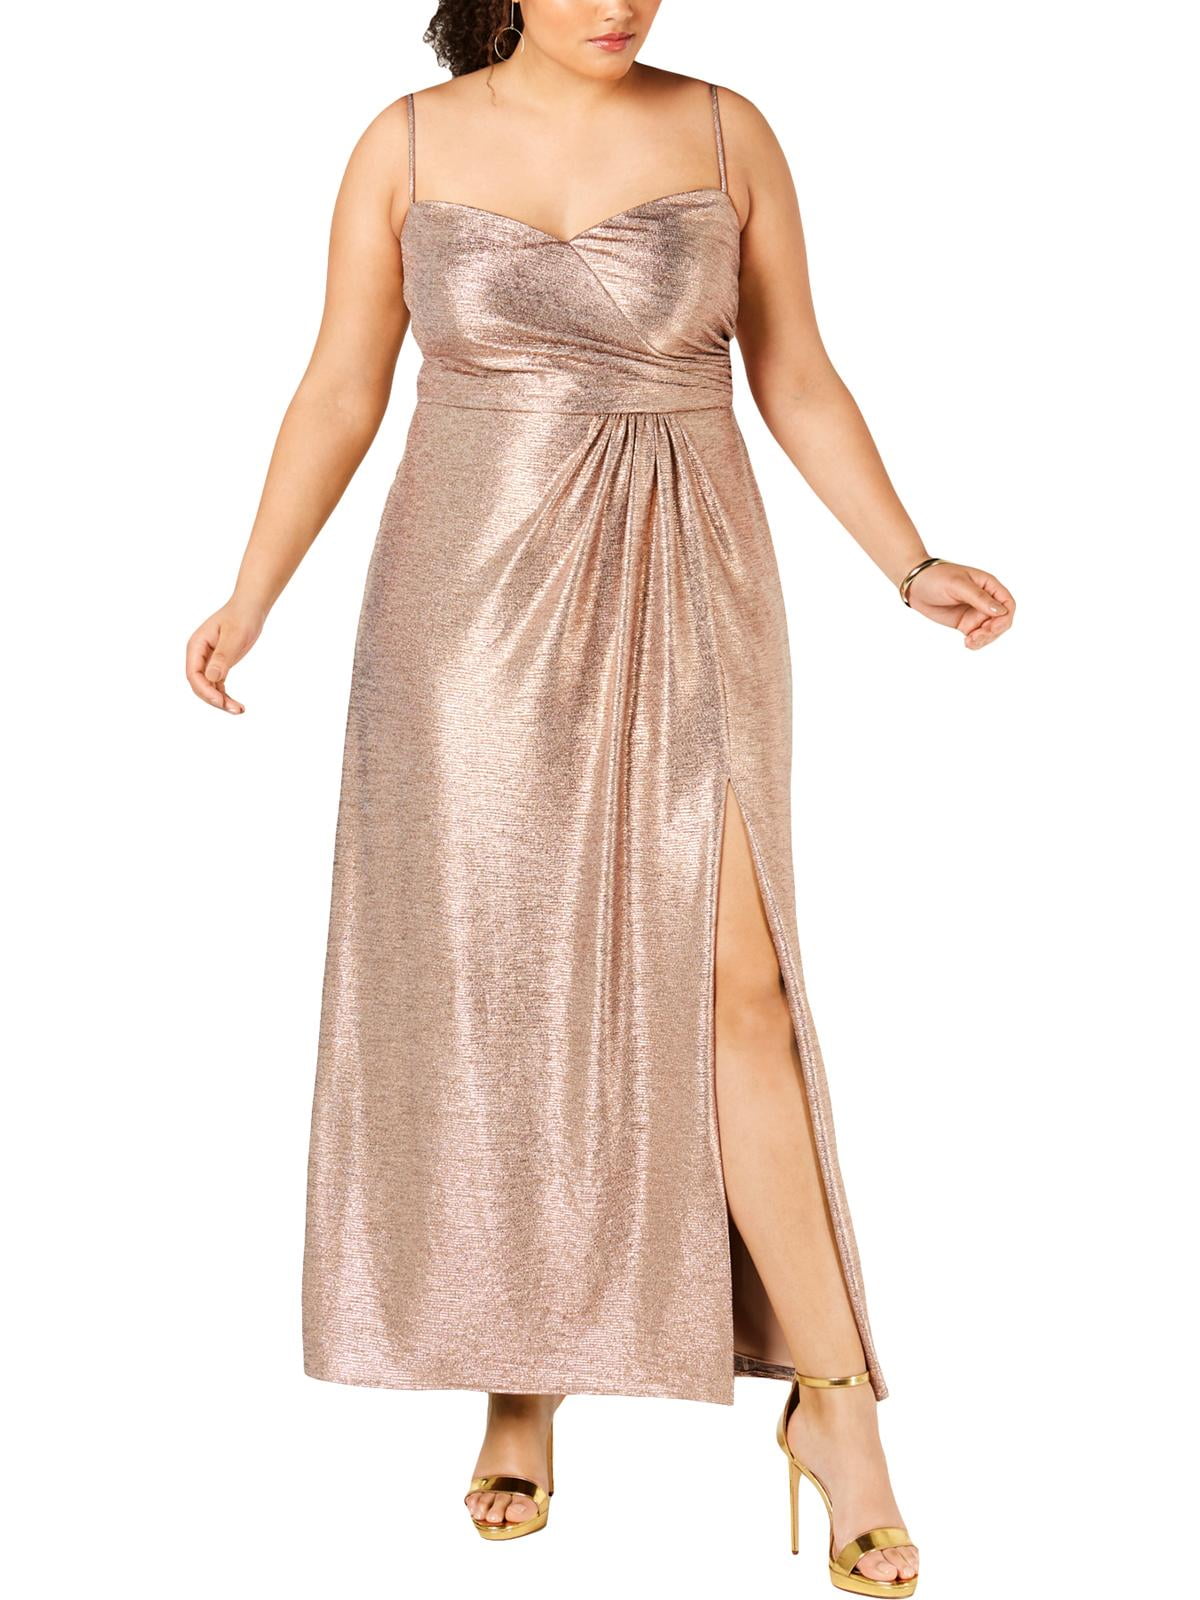 NW Nightway Womens Plus Metallic Surplice Evening Dress Pink 18W